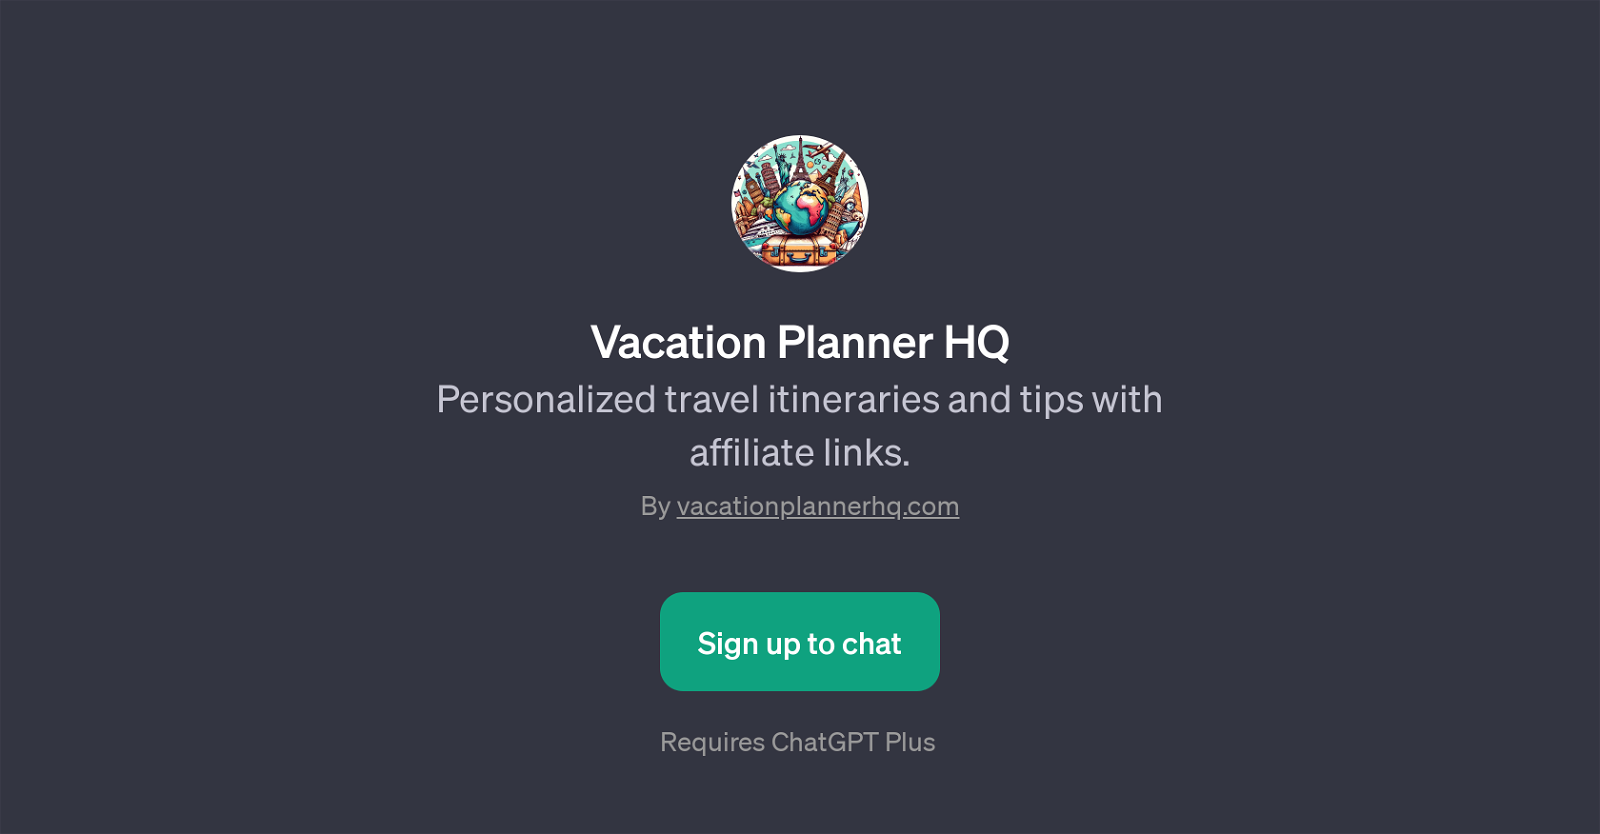 Vacation Planner HQ website